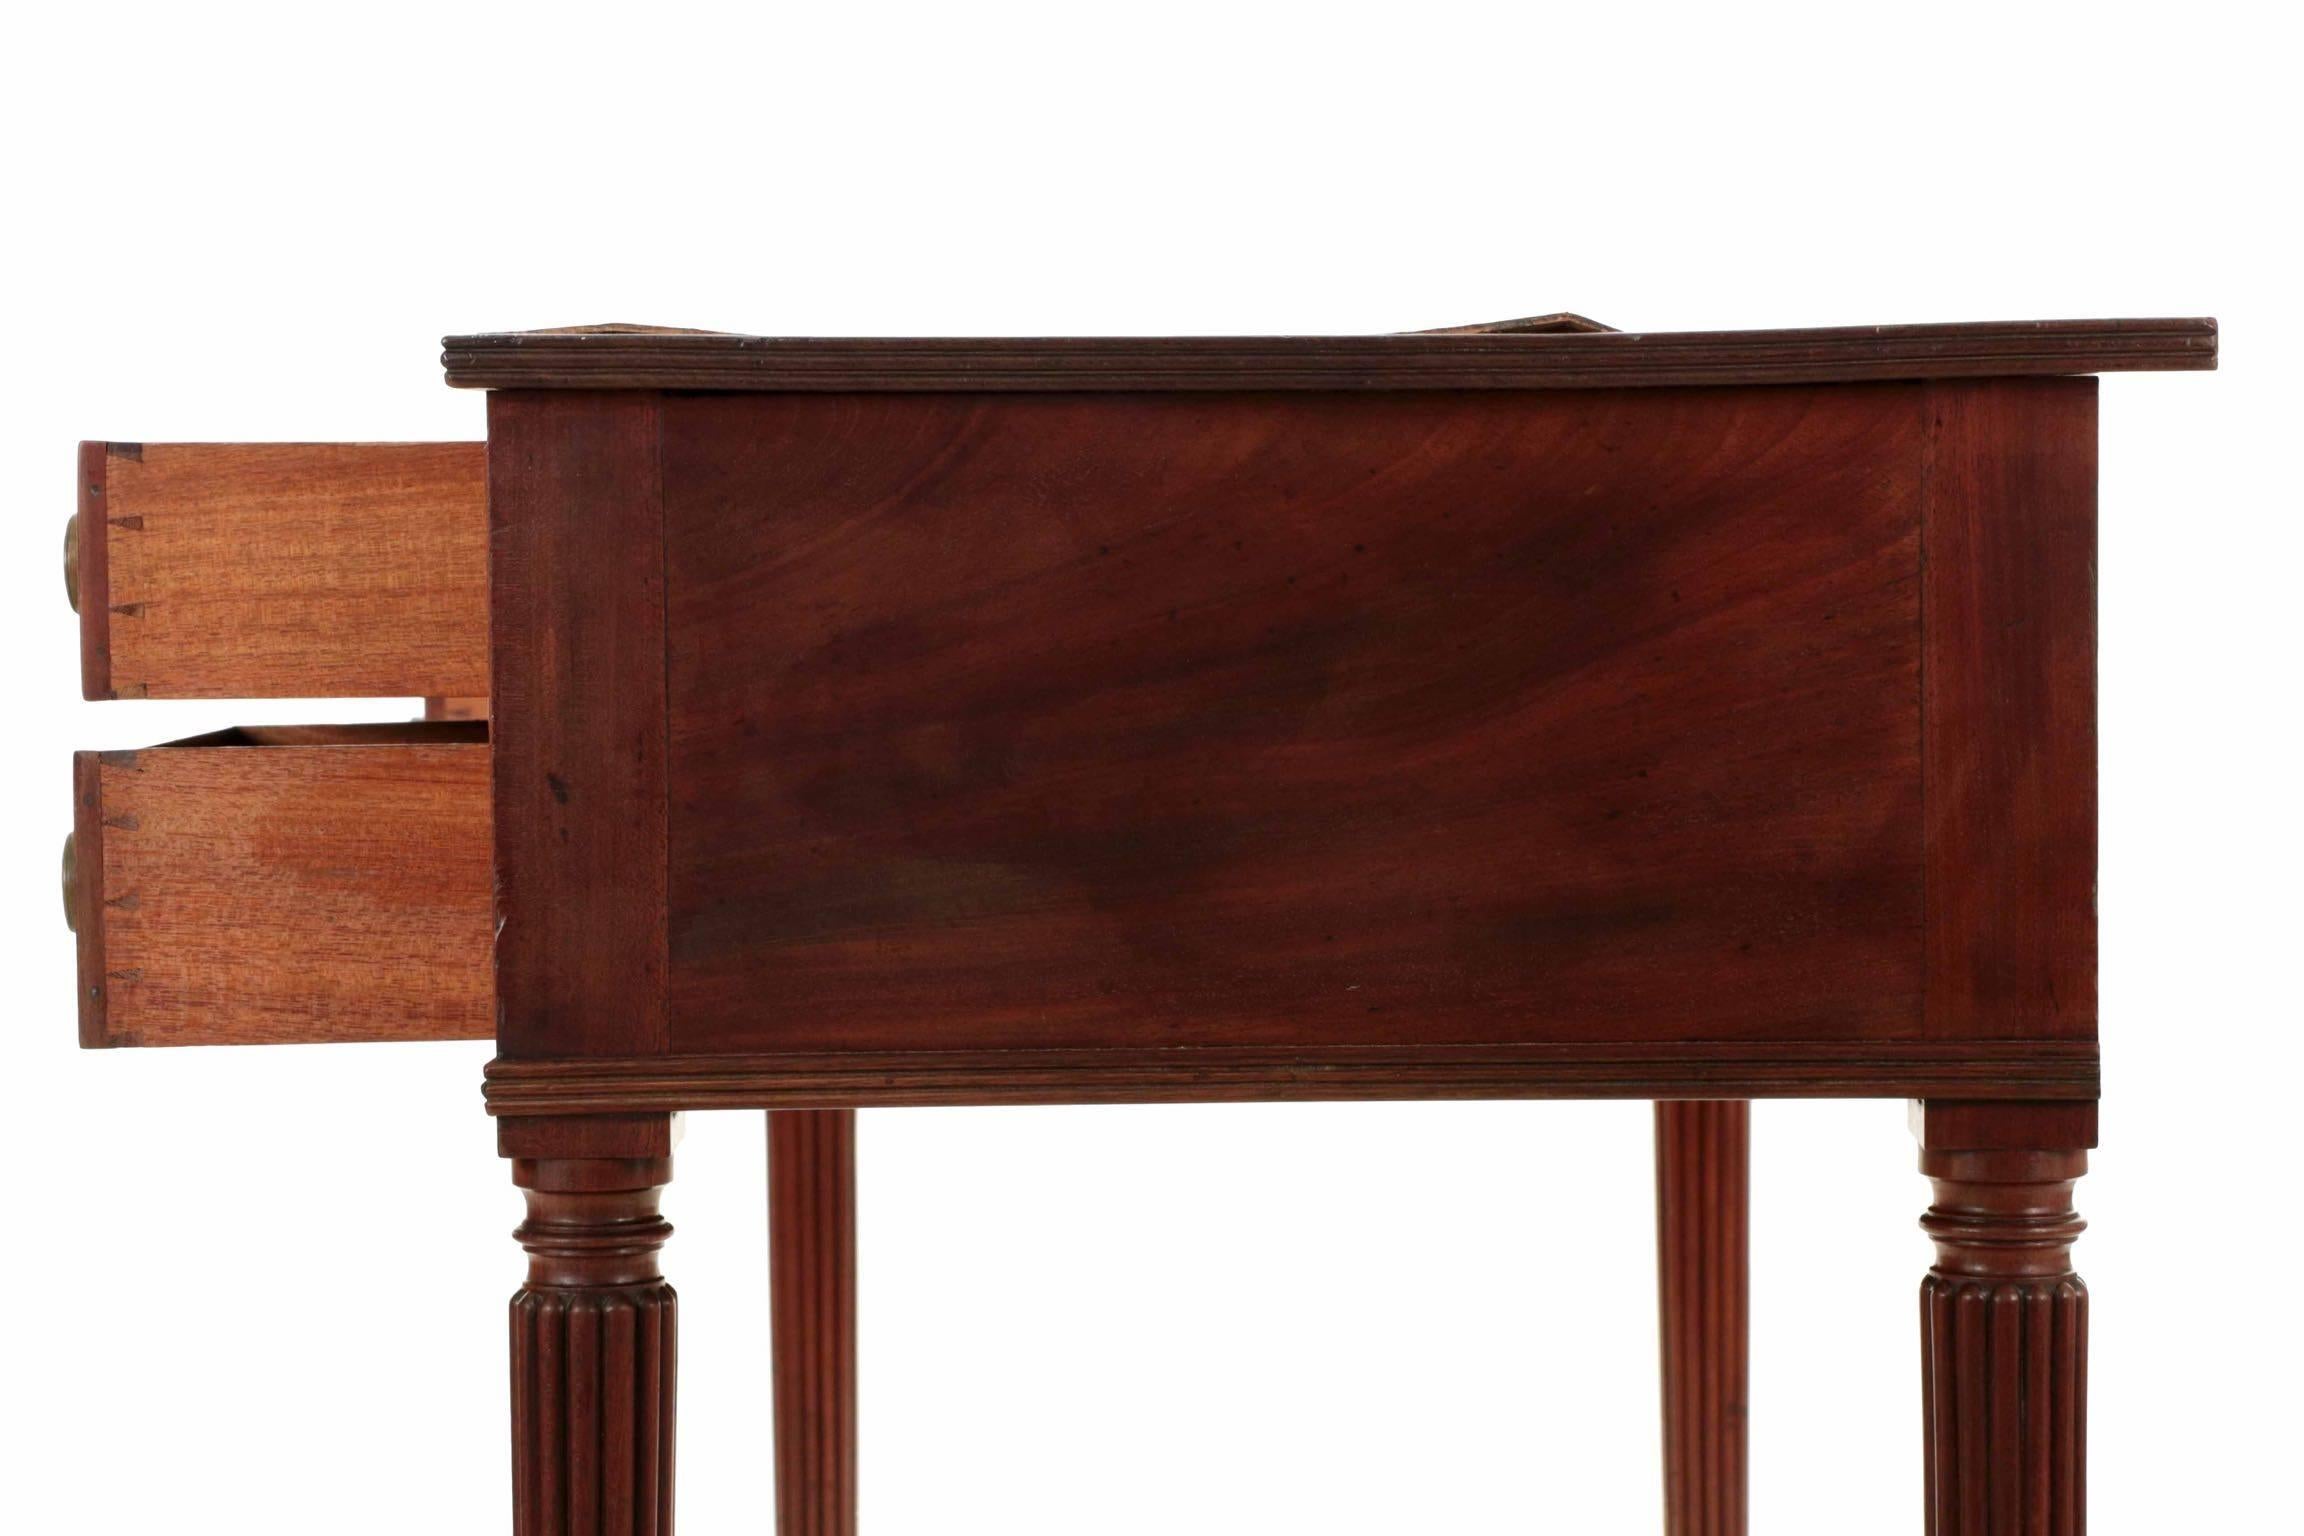 English Regency Period Mahogany & Leather Antique Writing Desk Table c. 1815-30 (Leder)